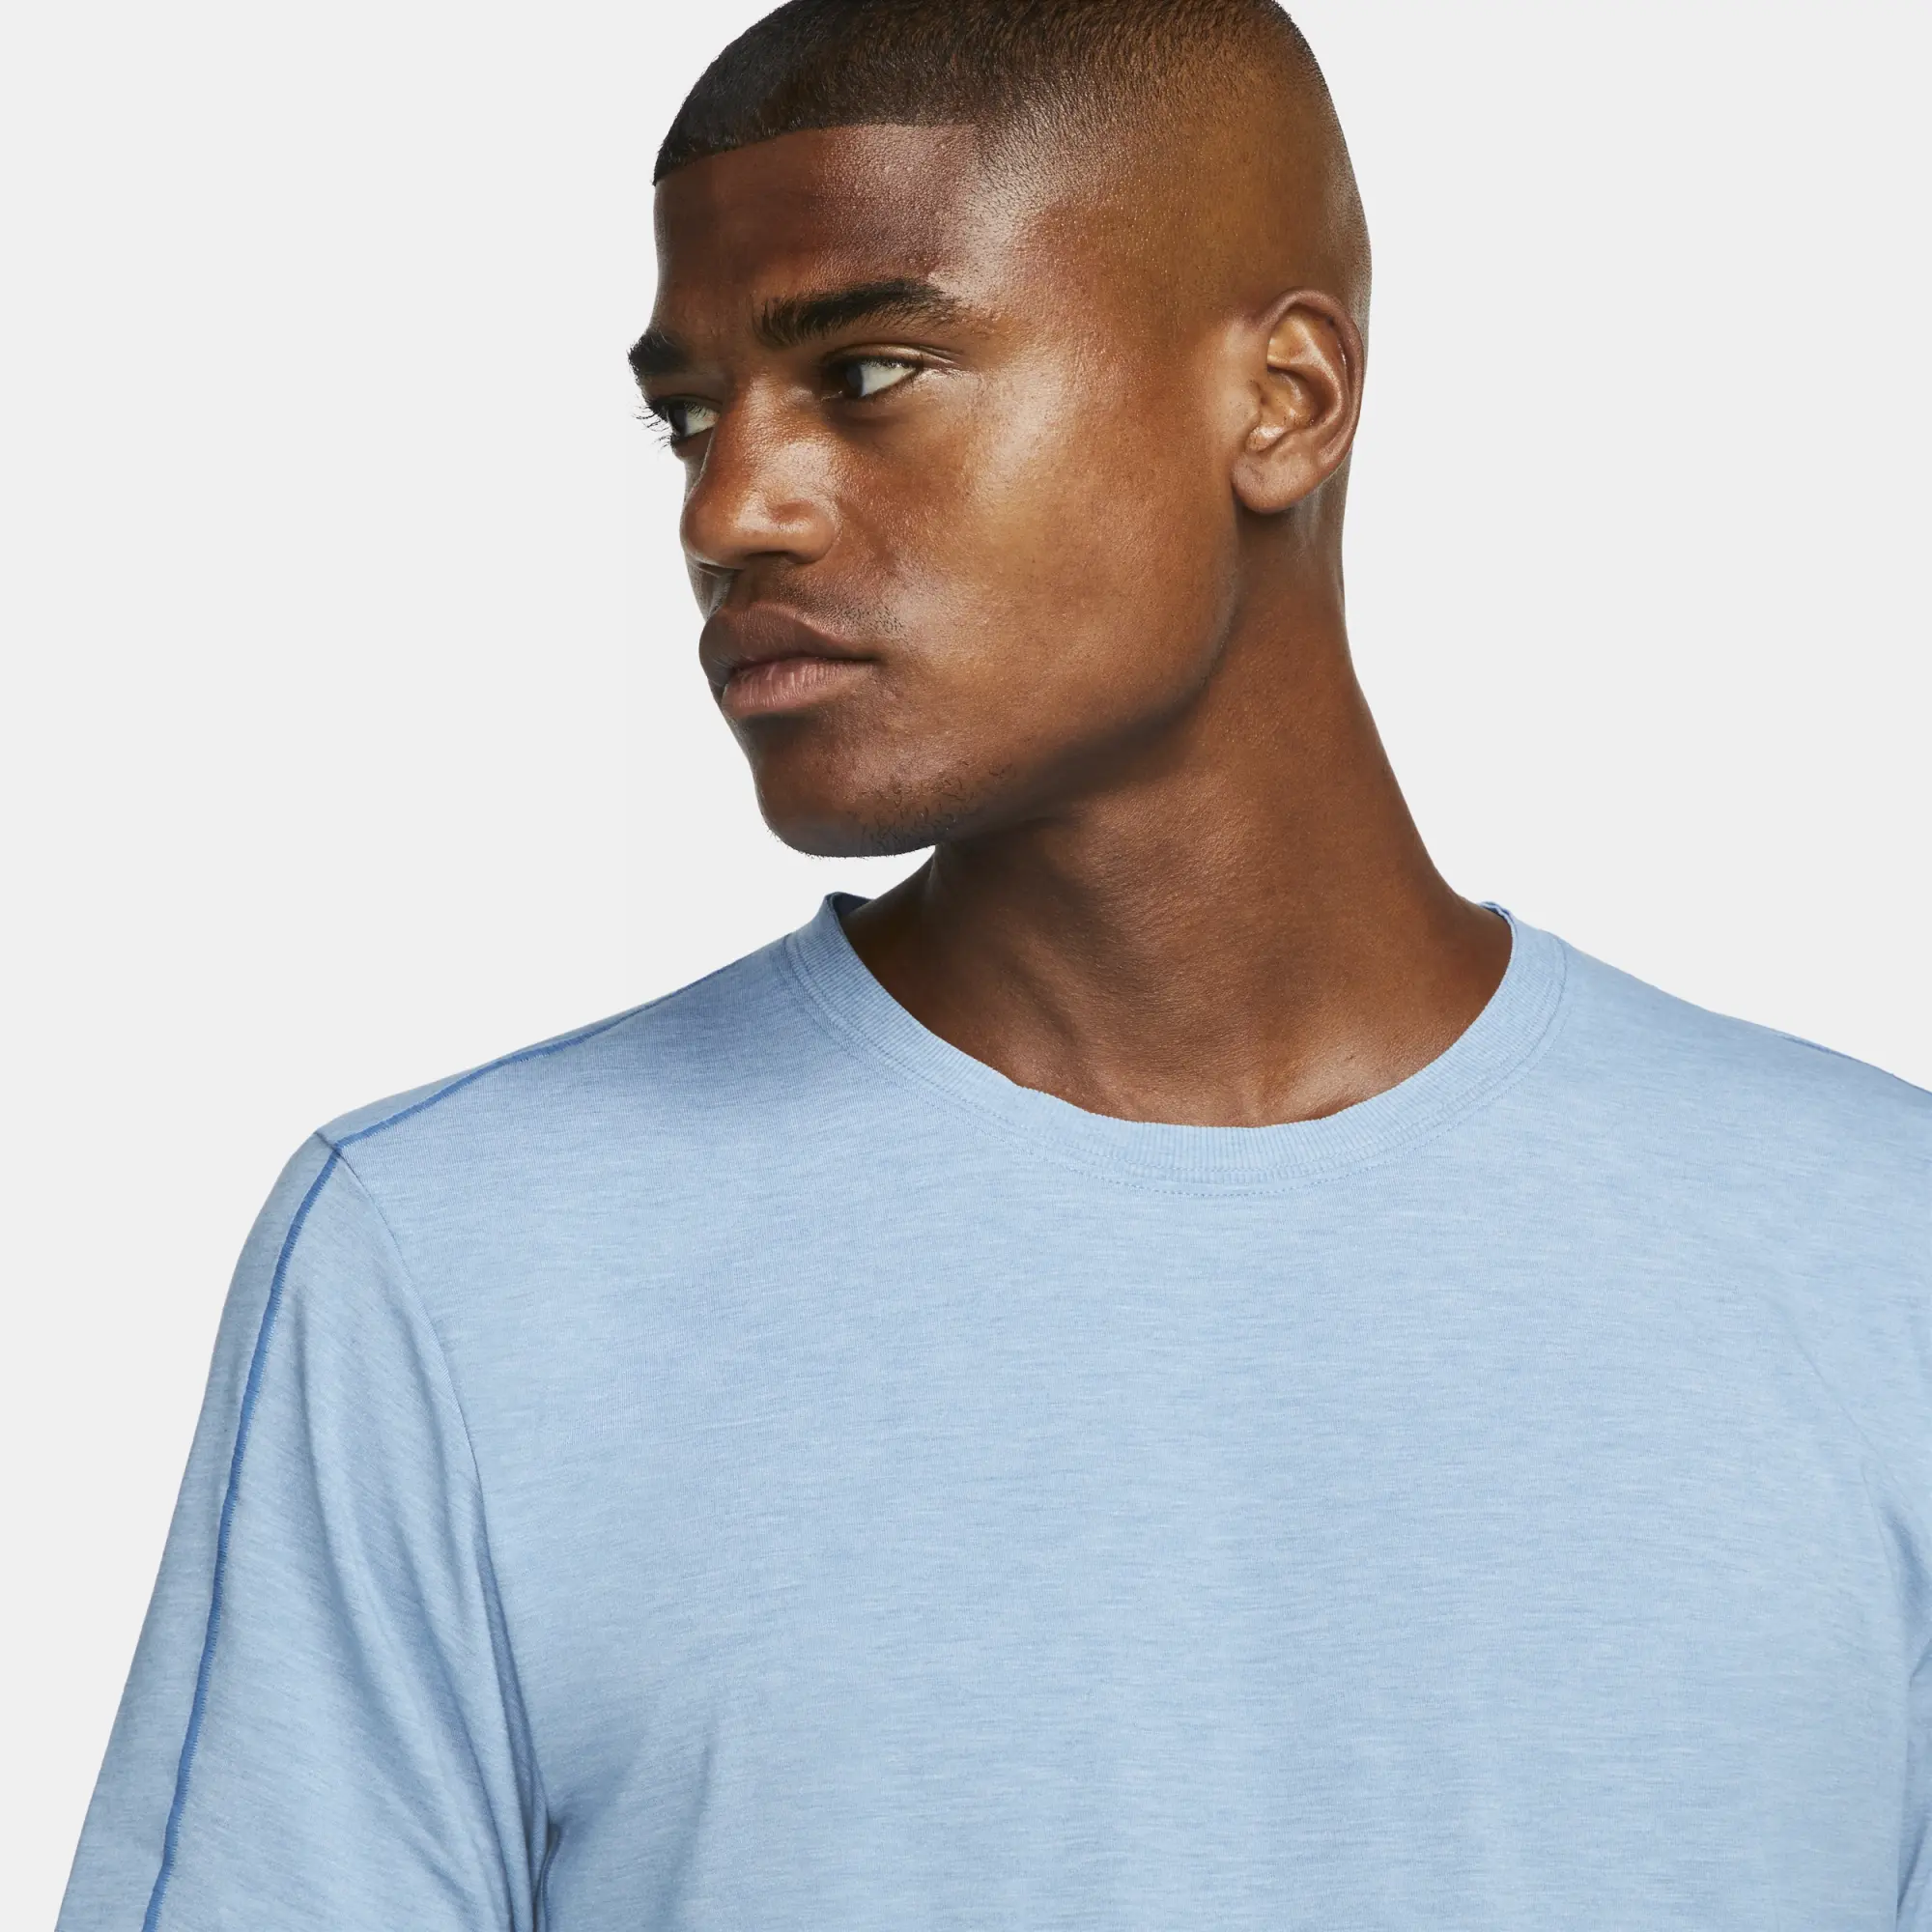 Nike Yoga Dri-Fit t-shirt in blue, DM7825-441